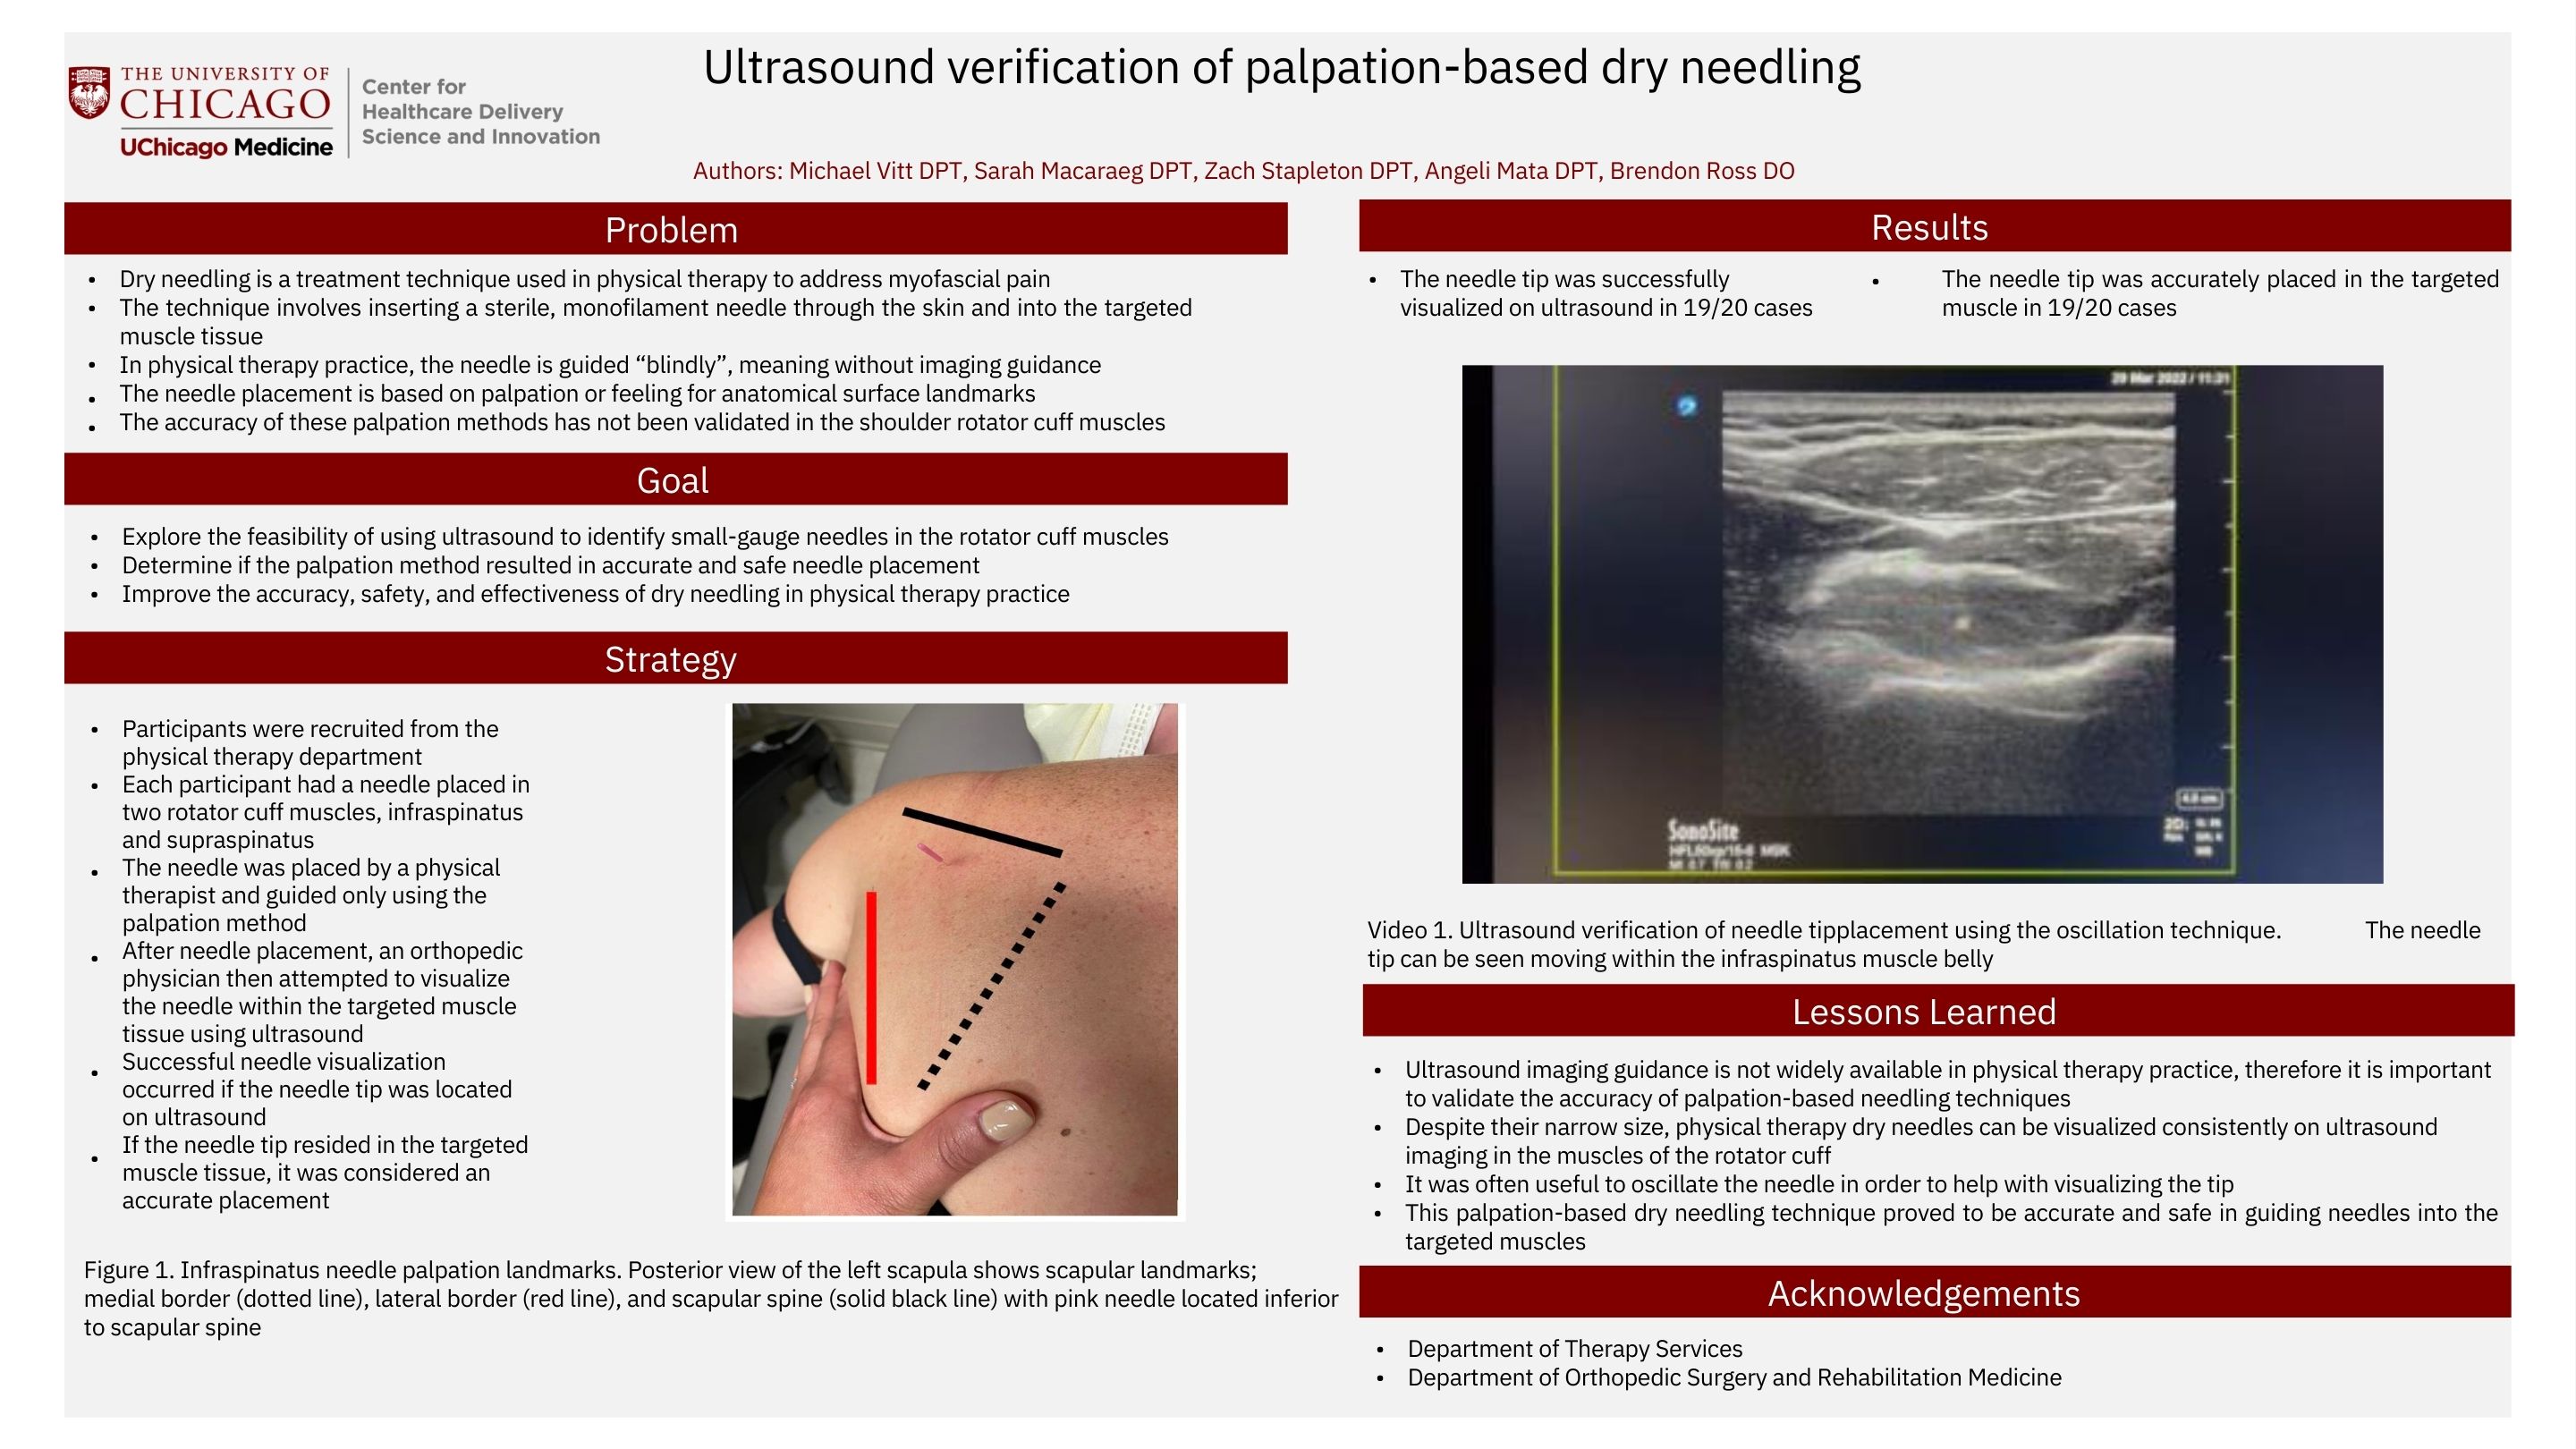 VITT_Ultrasound Verification of Palpation Based Dry Needling